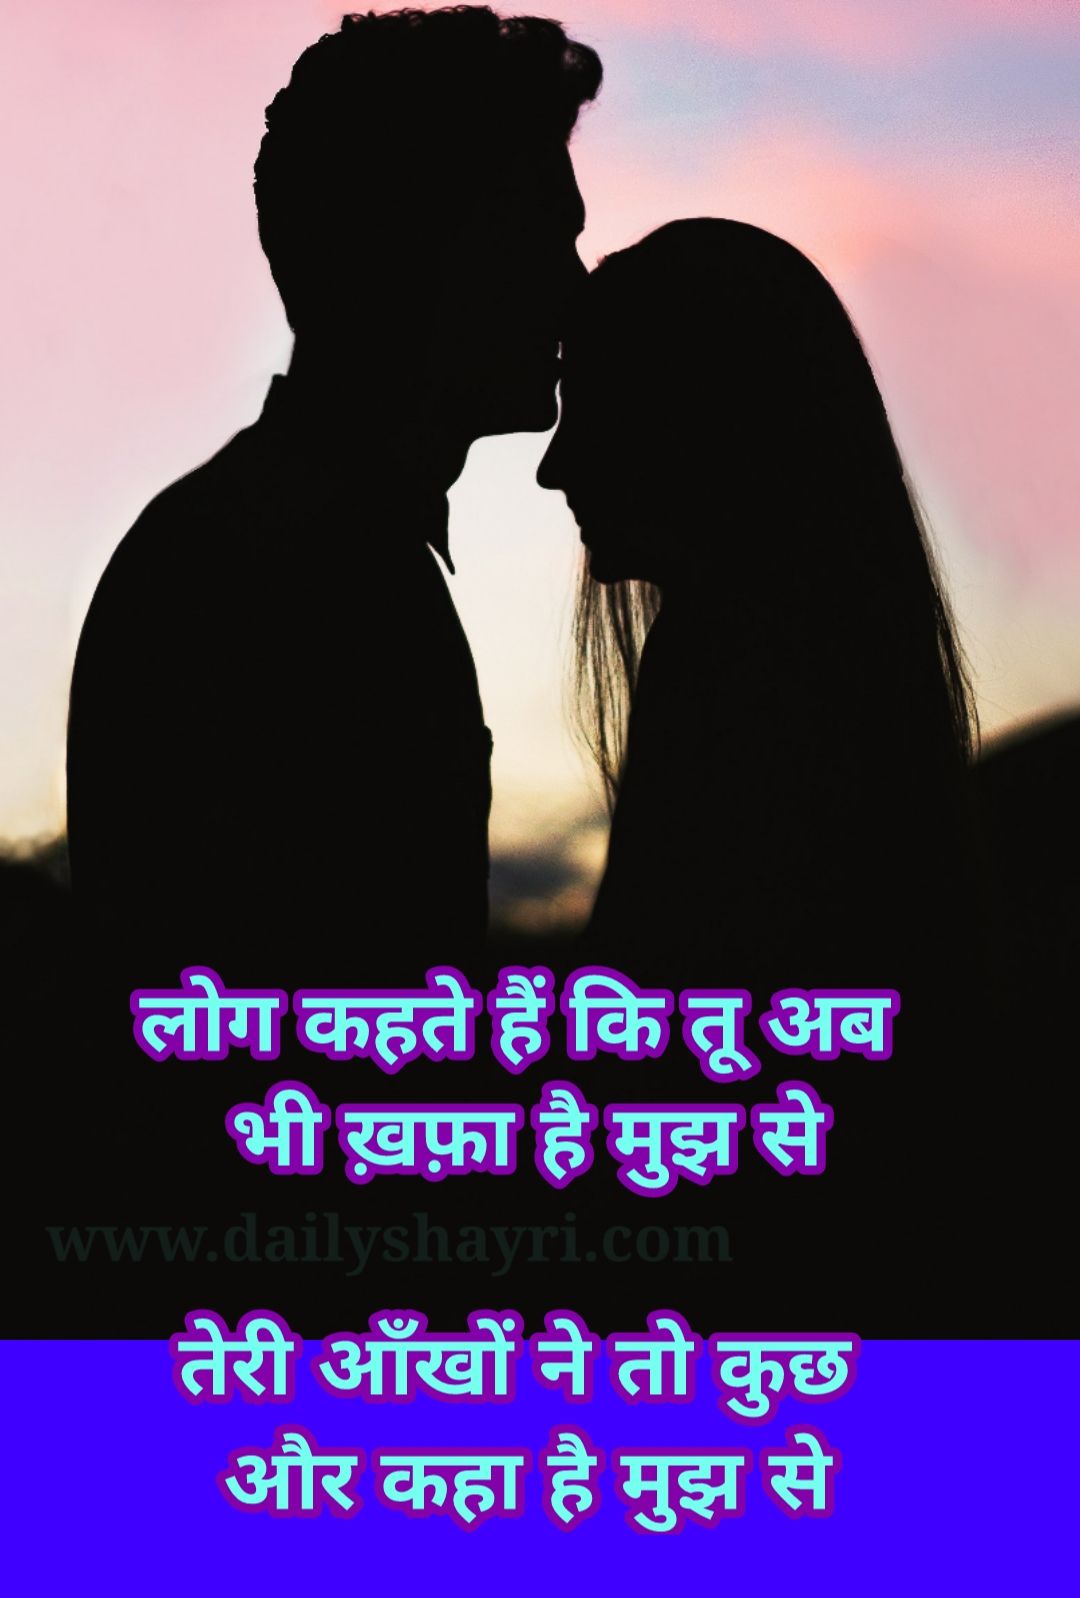 2020 Hindi Romantic Shayari Images Hd Hindi Shayari Love